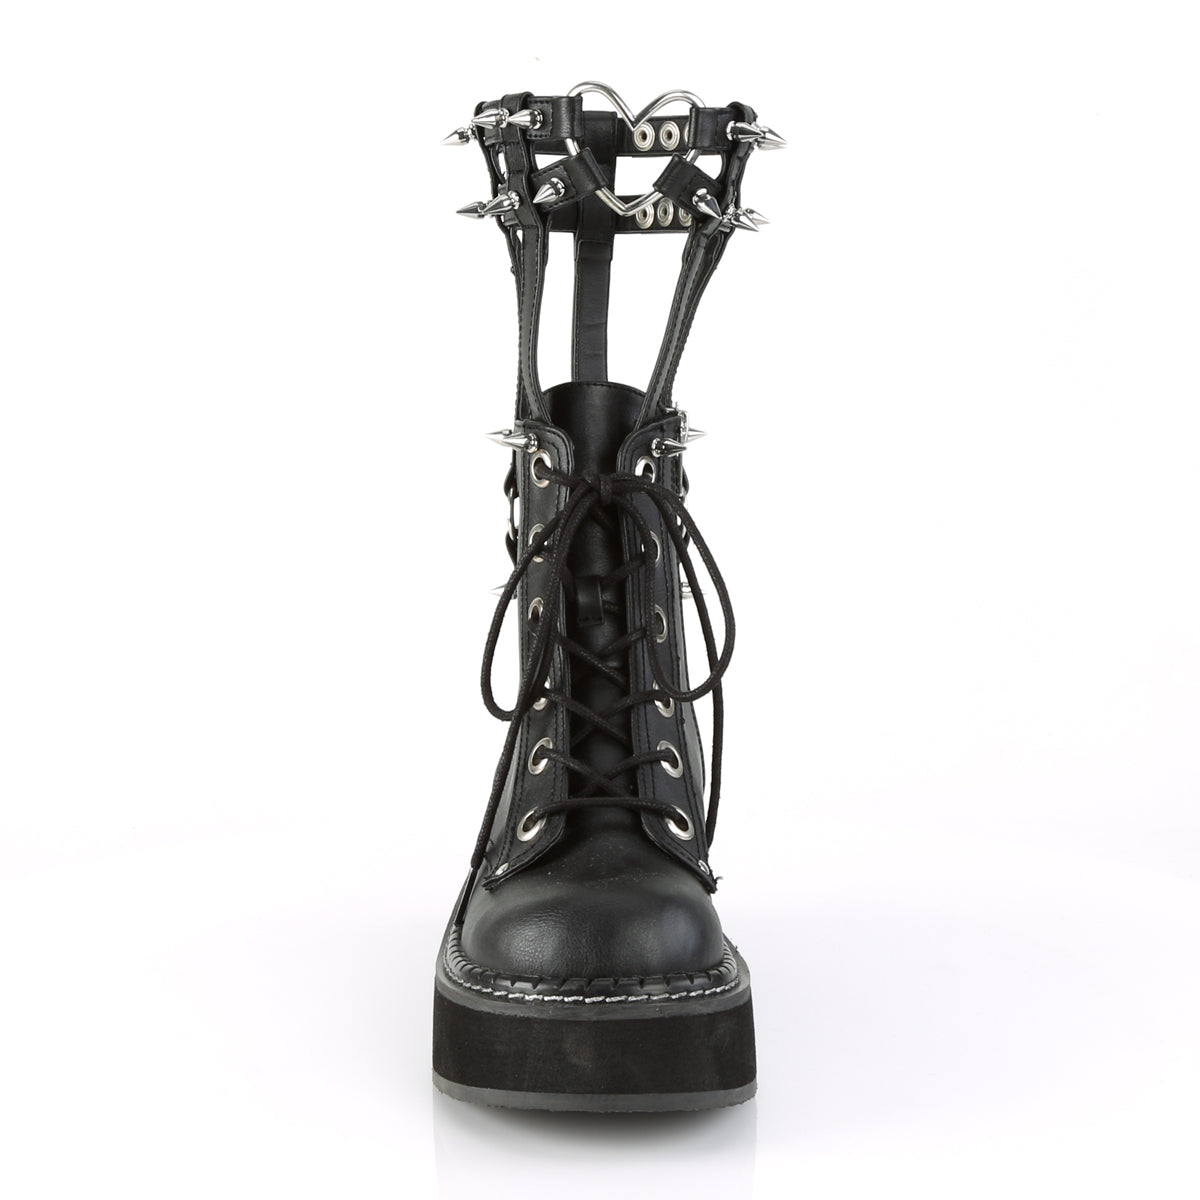 EMILY-357 Demonia Black Vegan Leather Women's Mid-Calf & Knee High Boots [Alternative Footwear]